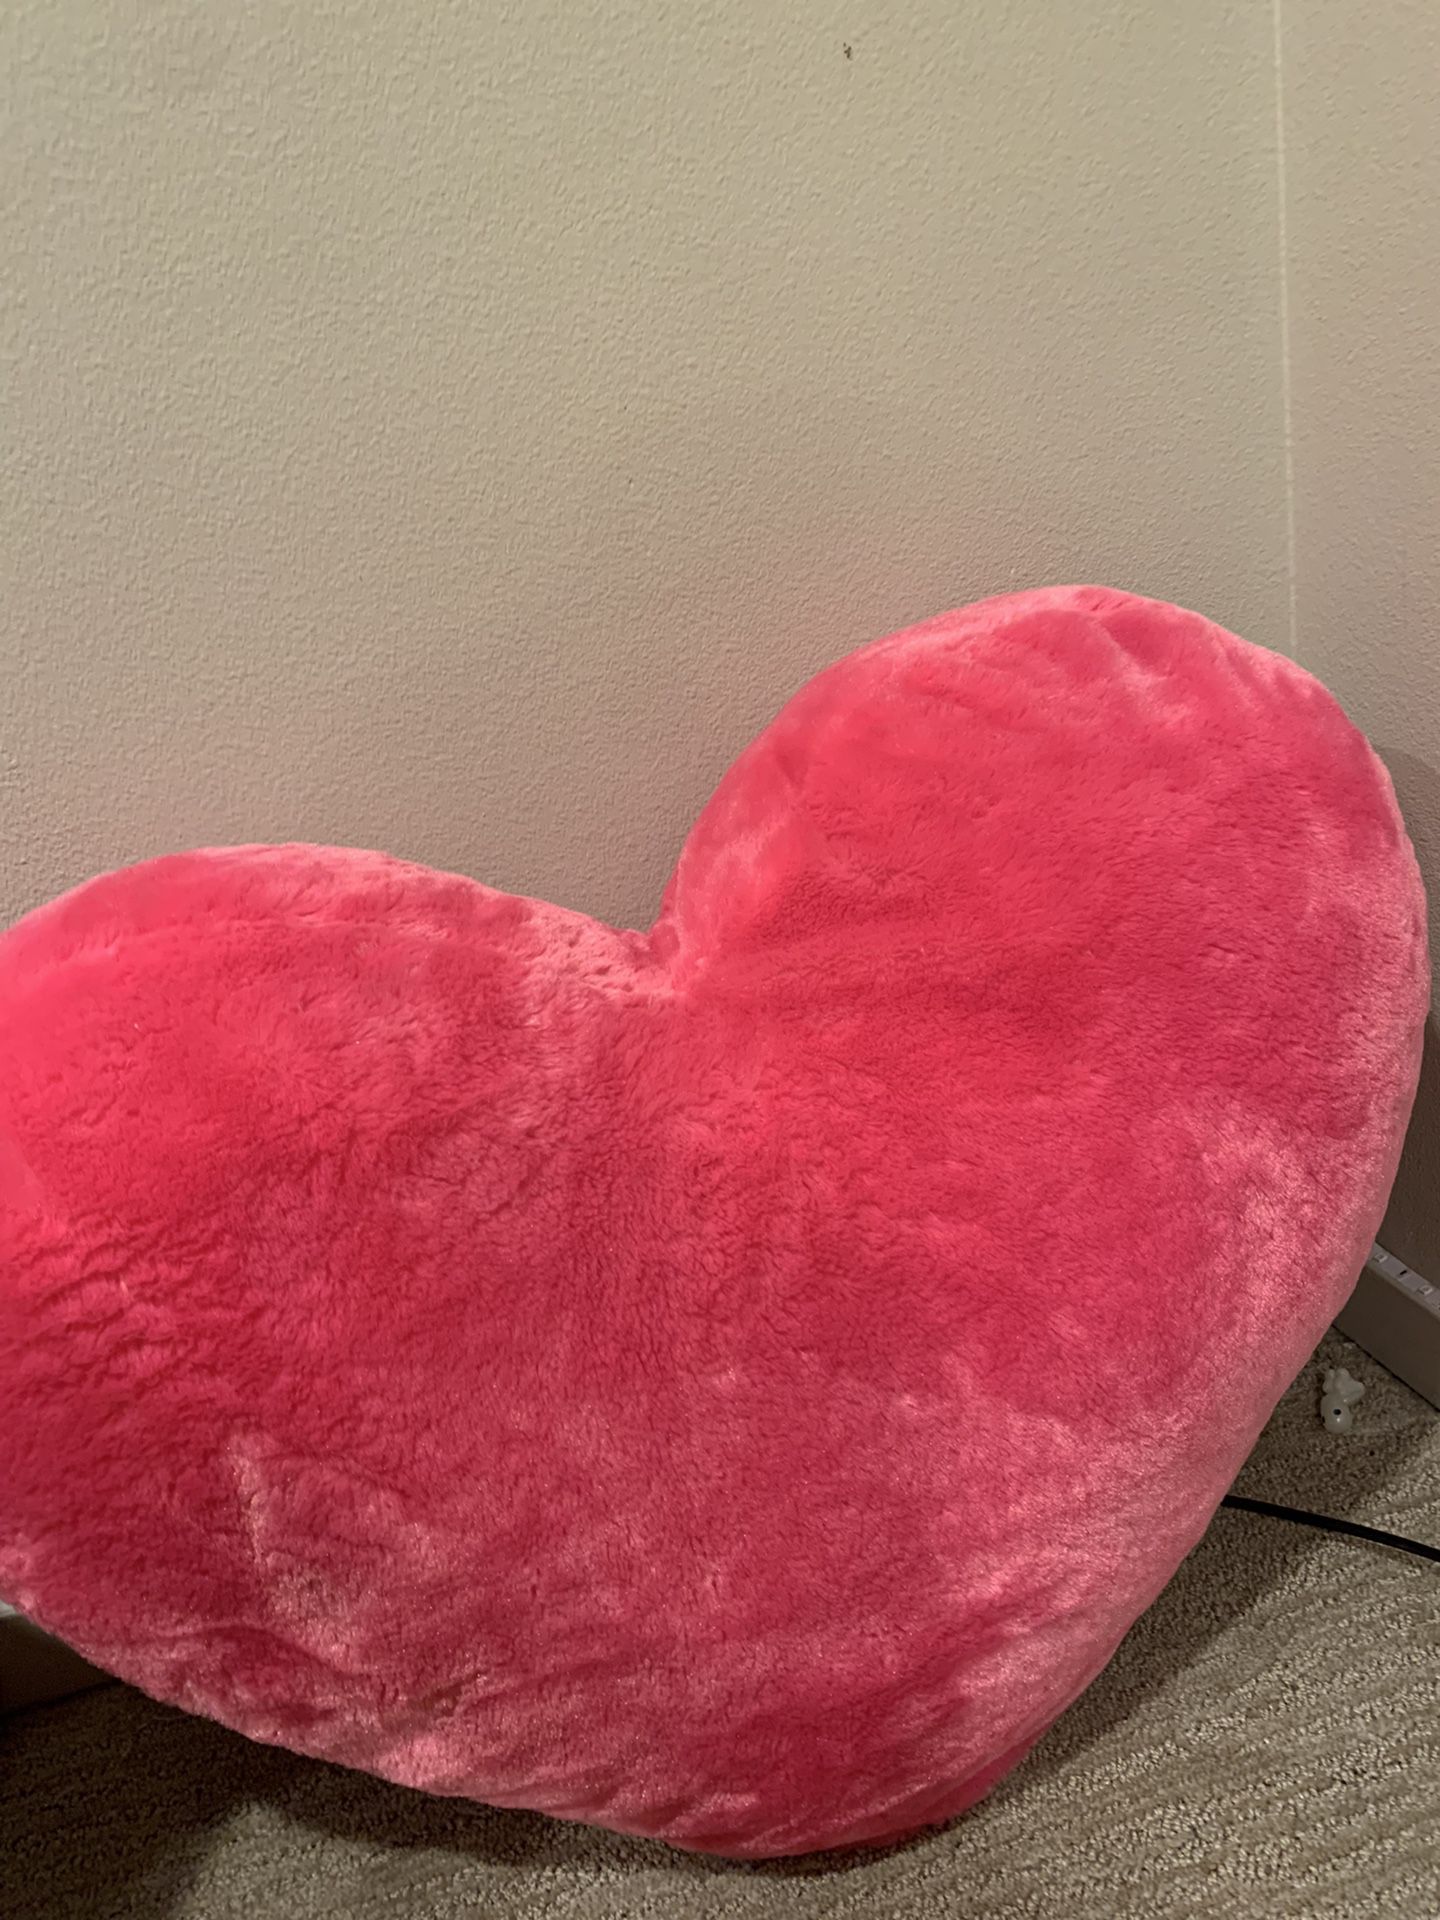 Giant Stuffed Bear And Heart